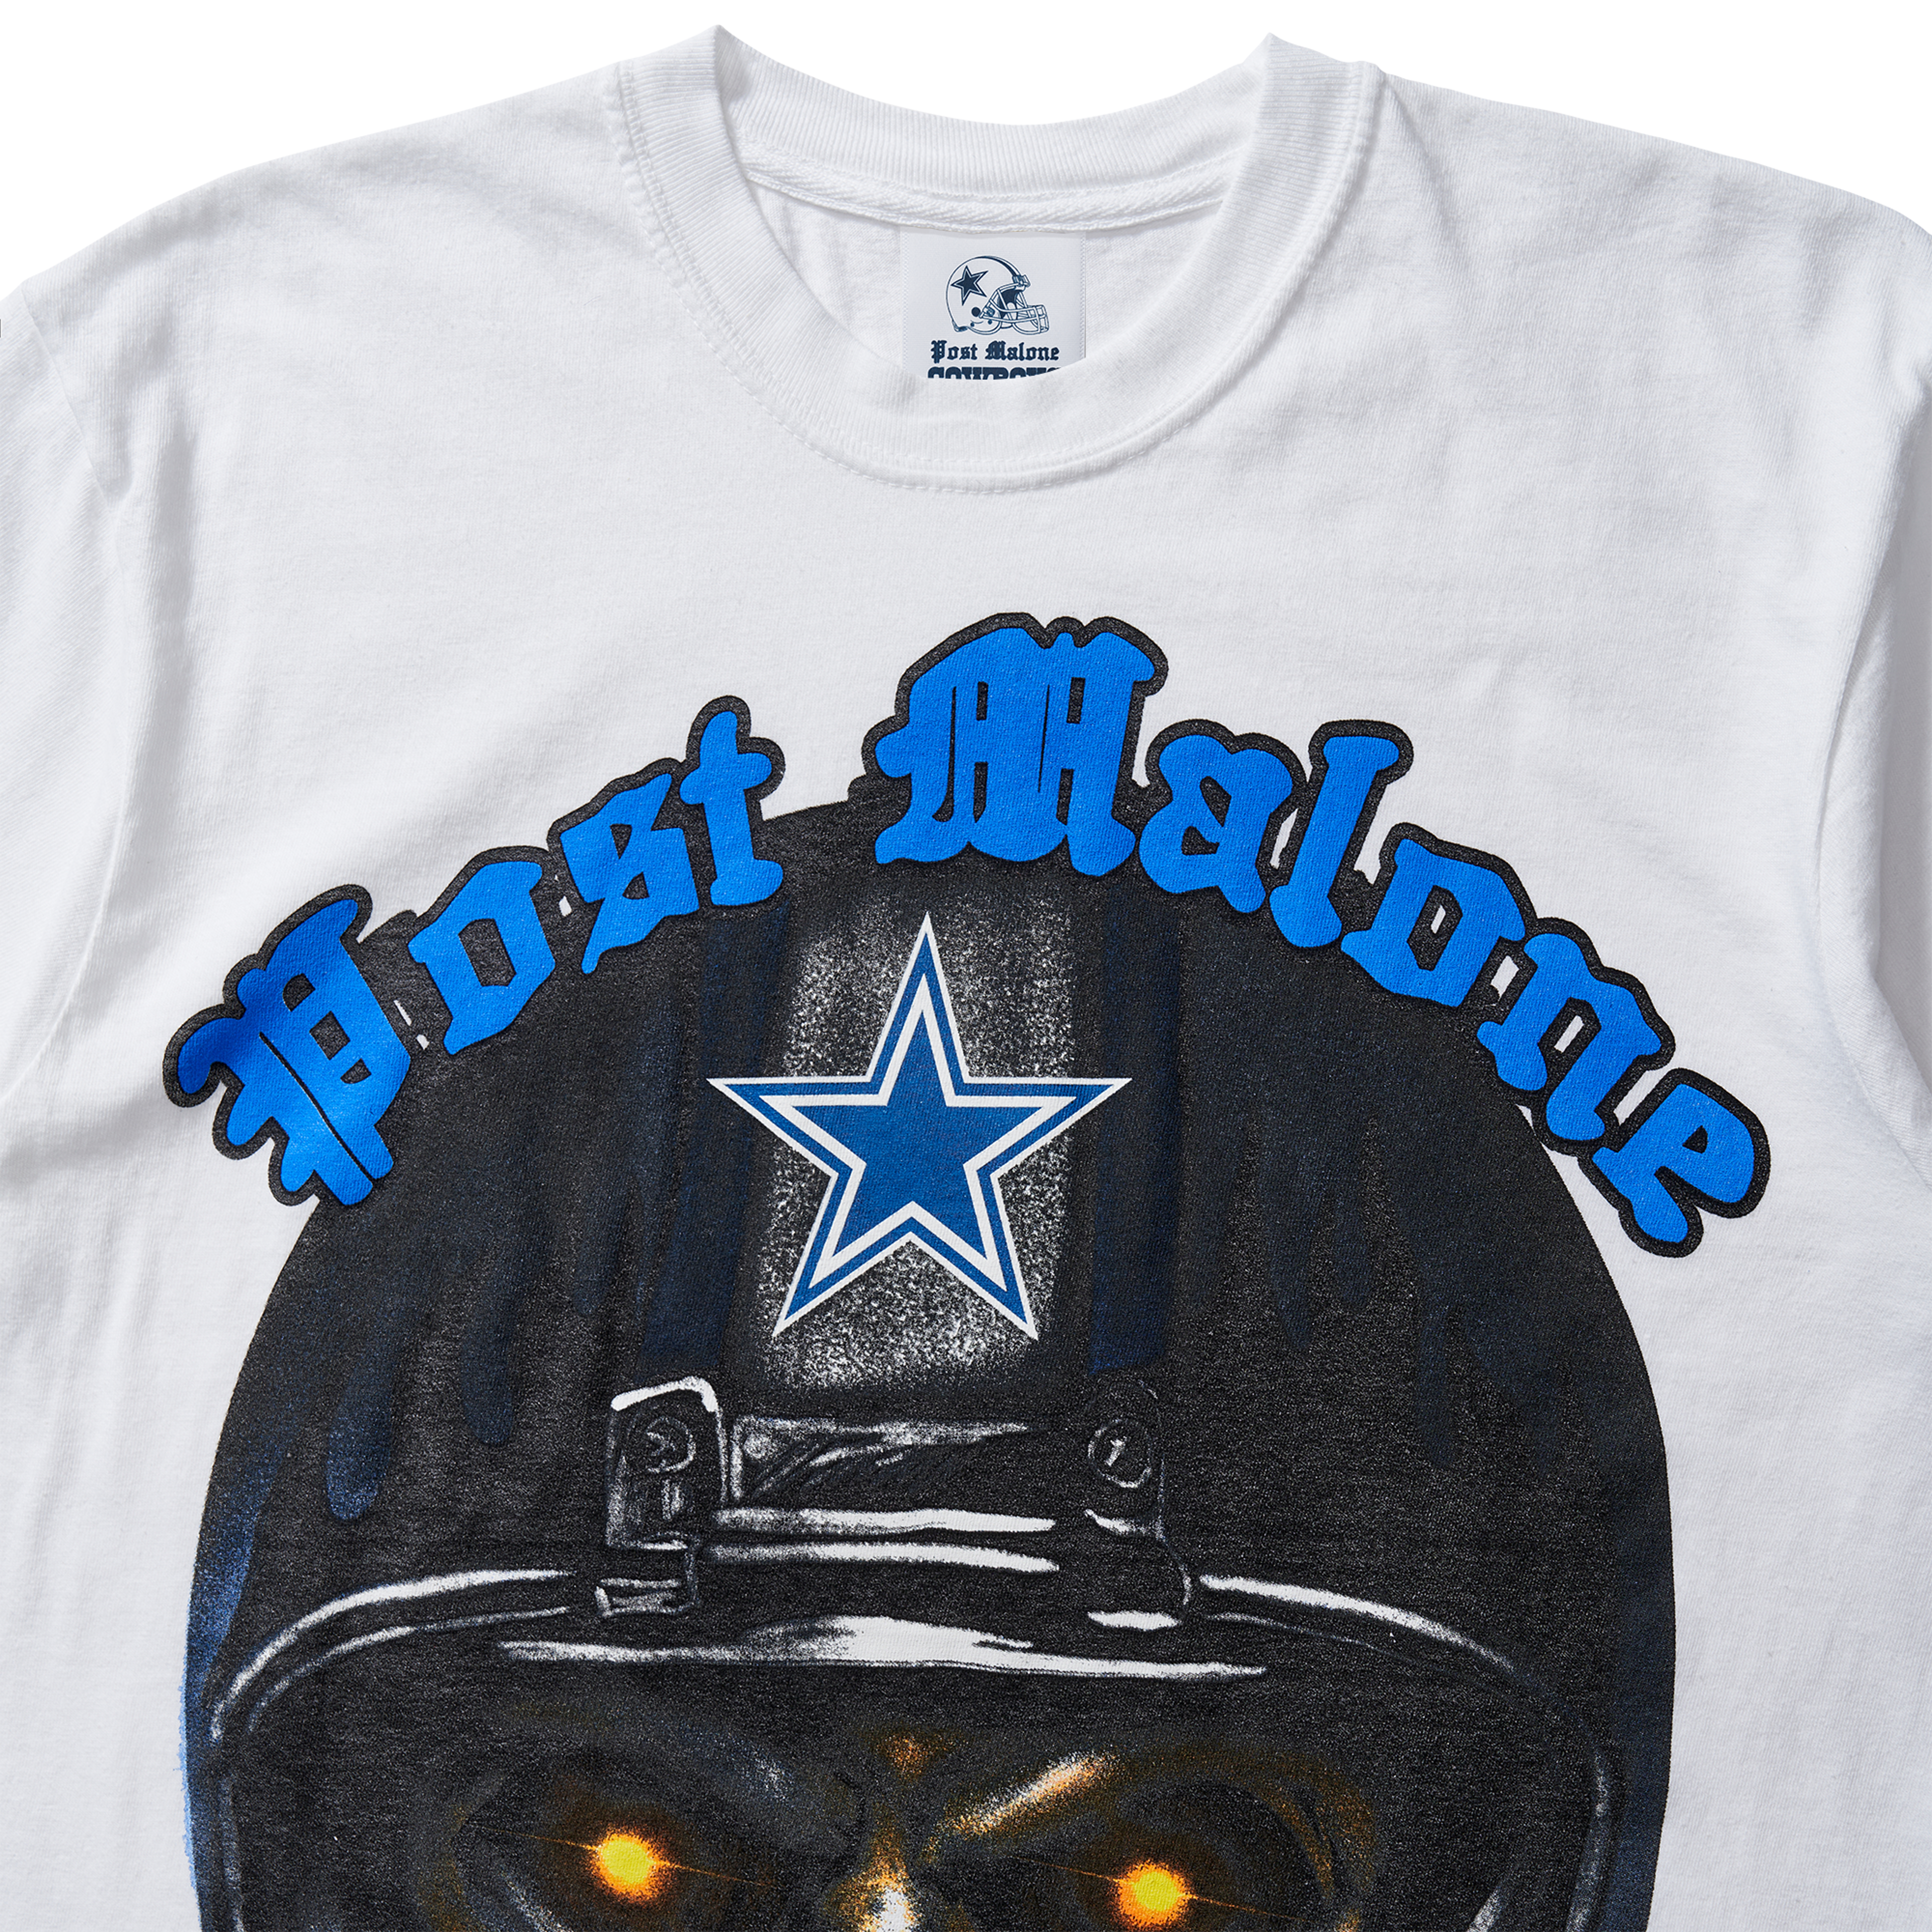 Alternate View 1 of Post Malone + Dallas Cowboys Skeleton Tee